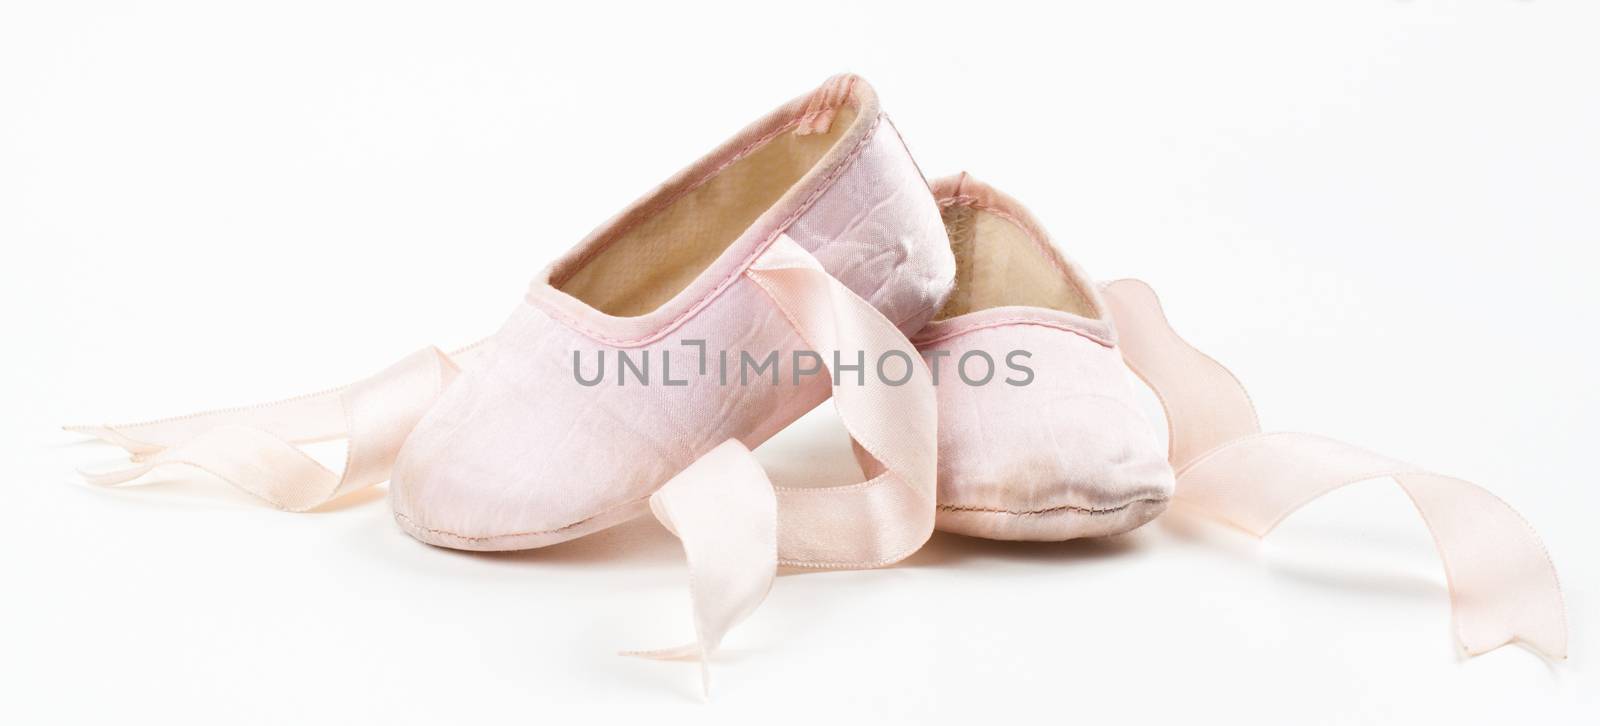 balerina shoes by orcearo